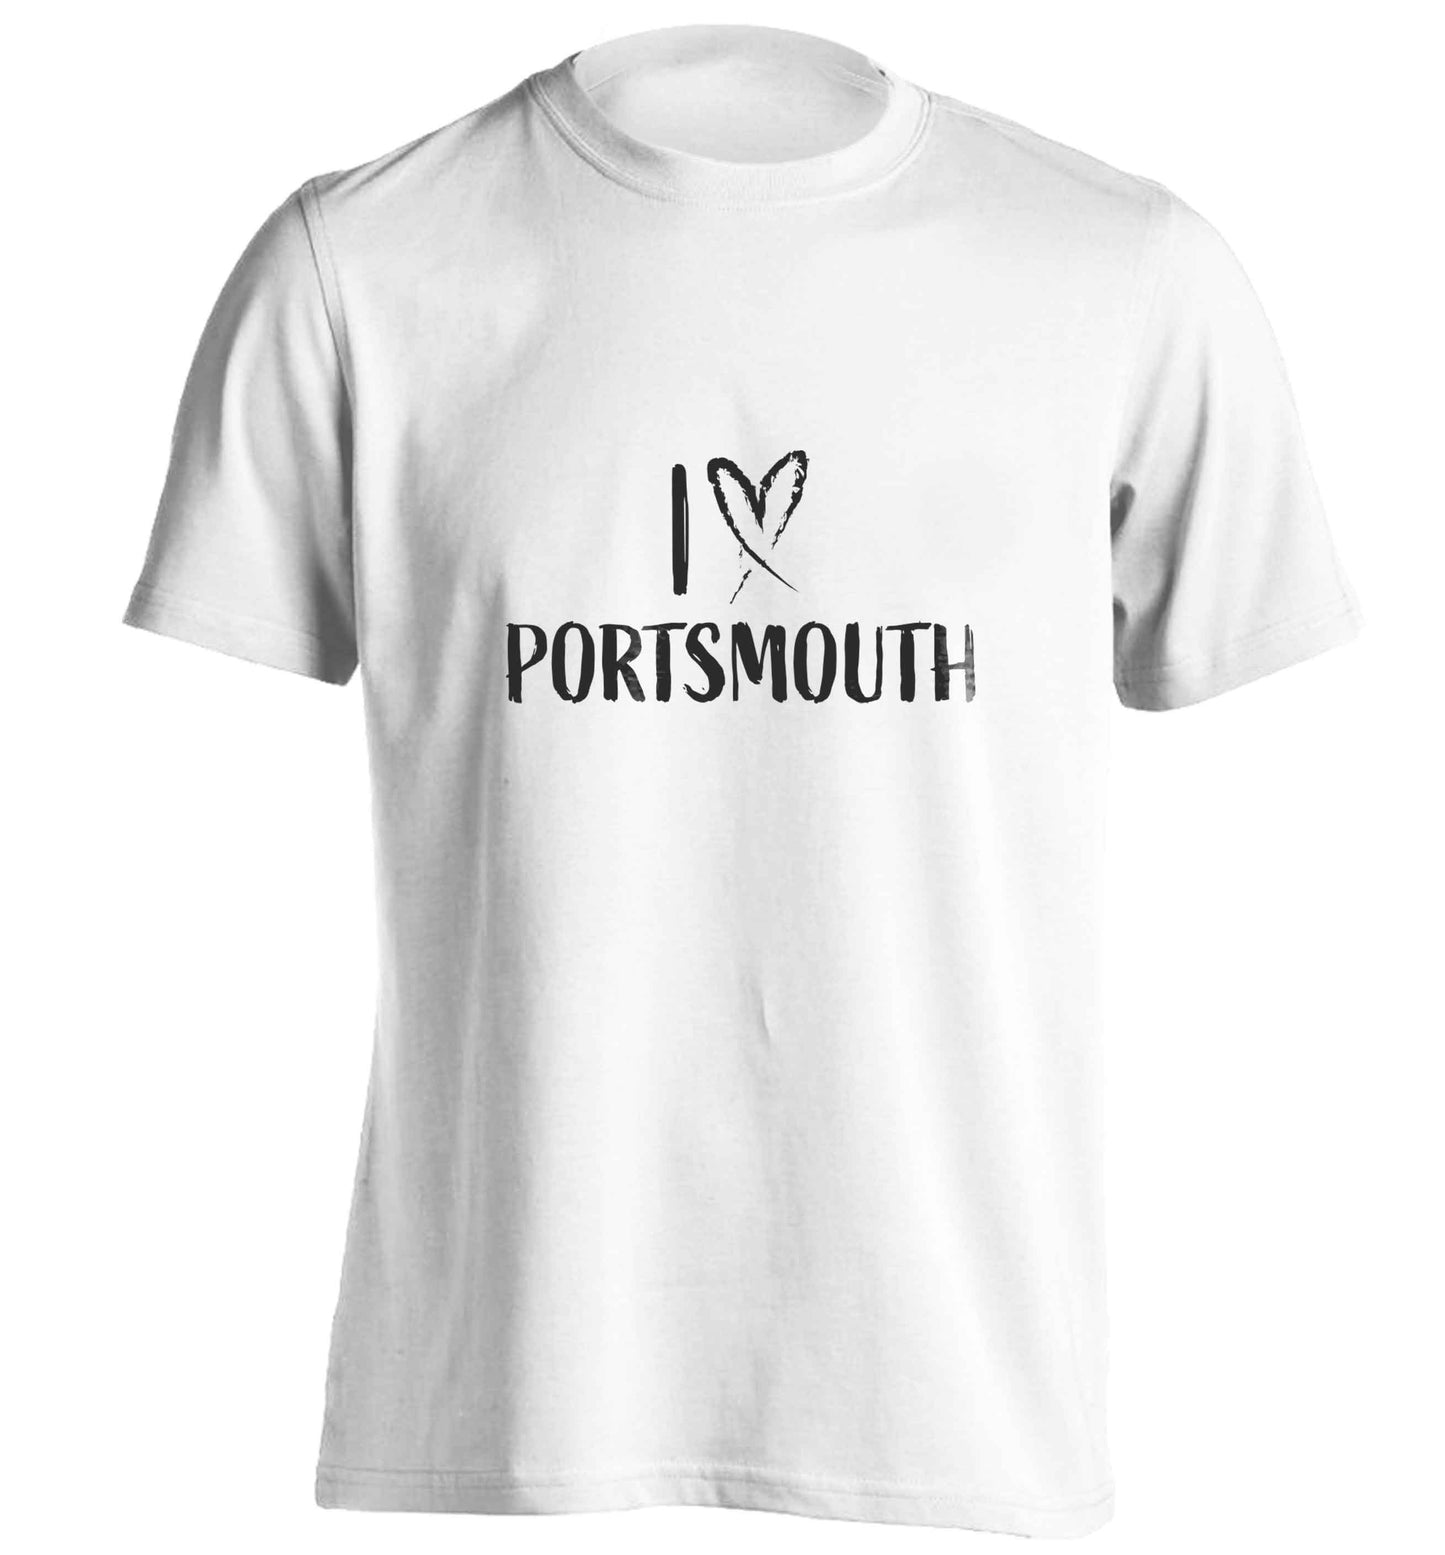 I love Portsmouth adults unisex white Tshirt 2XL